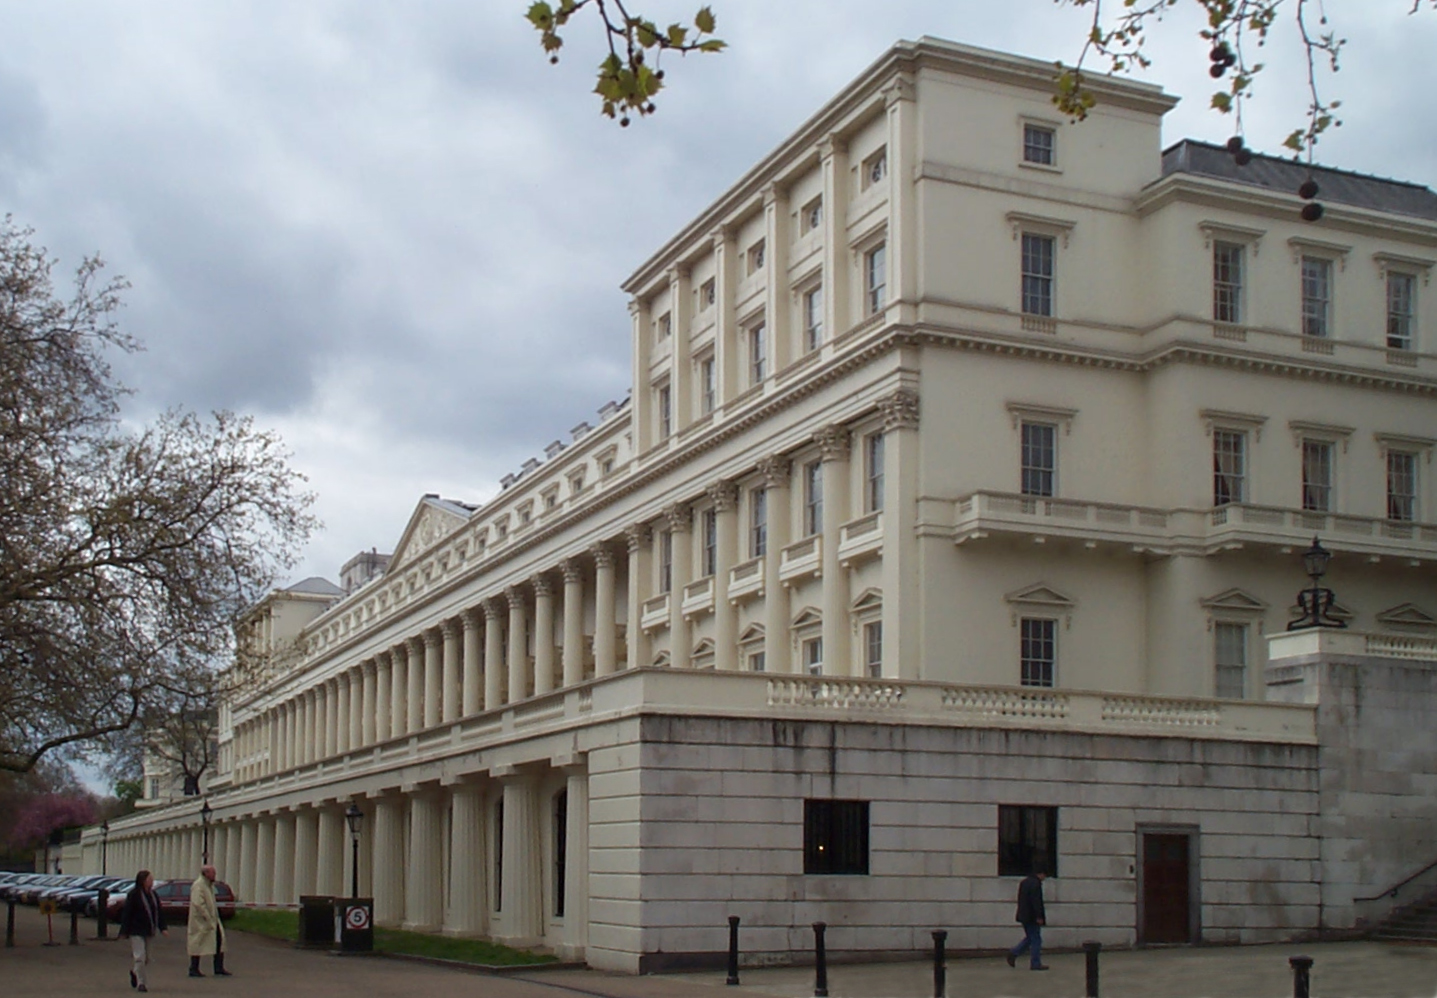 Das Gebäude der Royal Society in London (© Kaihsu Tai, Wikimedia Commons, CC BY 2.5)